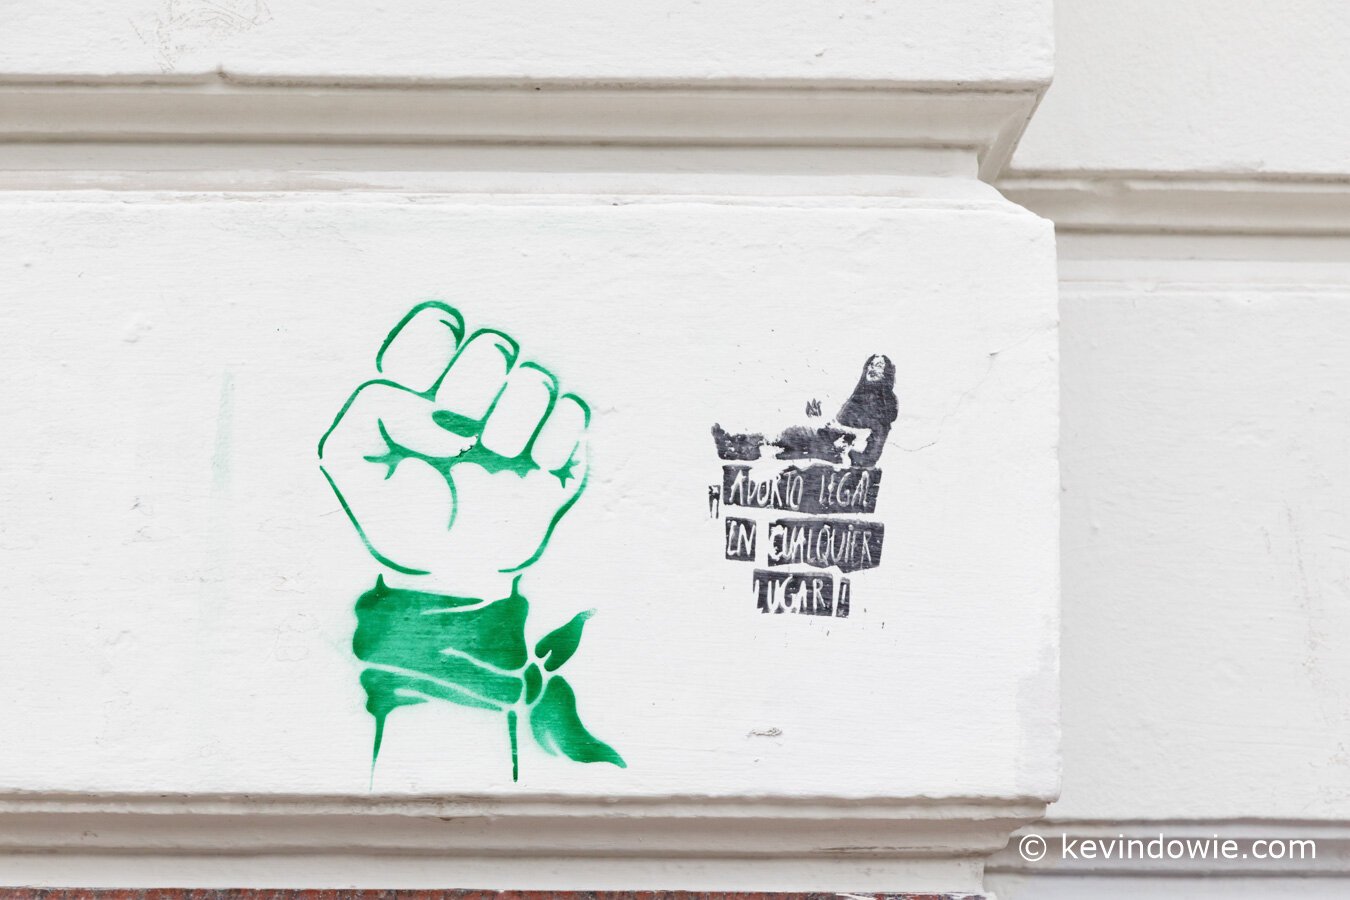 green scarf graffiti Buenos Aires